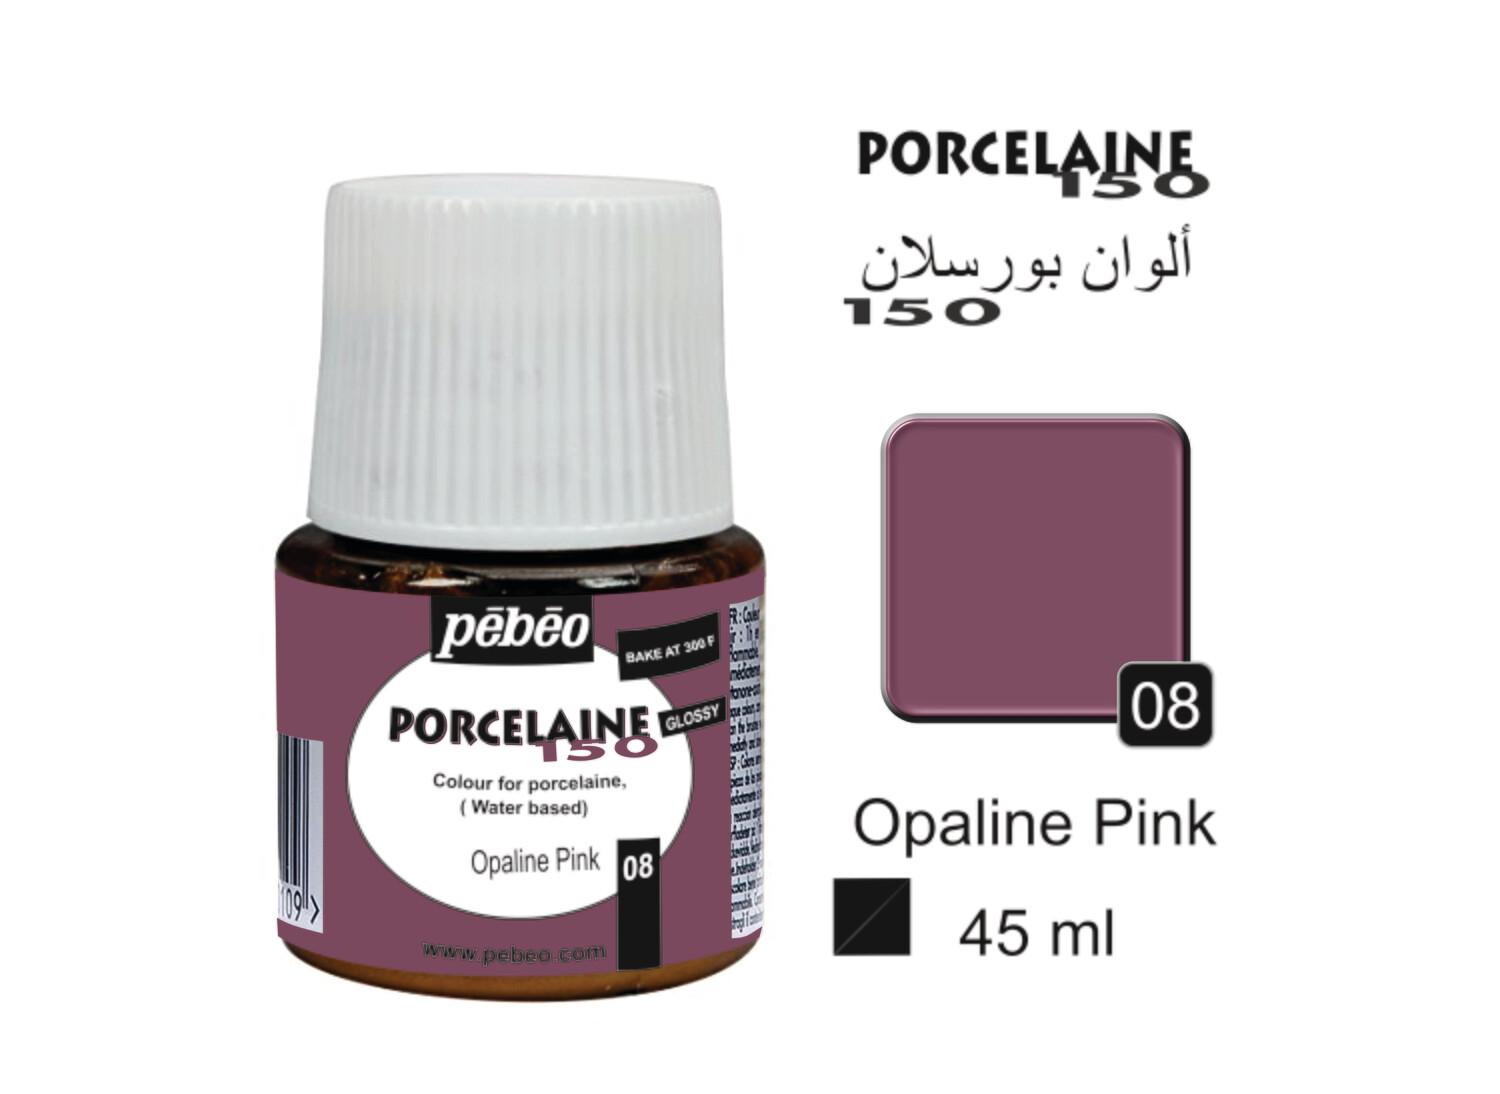 PORCELAINE 150, GLOSS 45 ml, Opaline pink No. 08